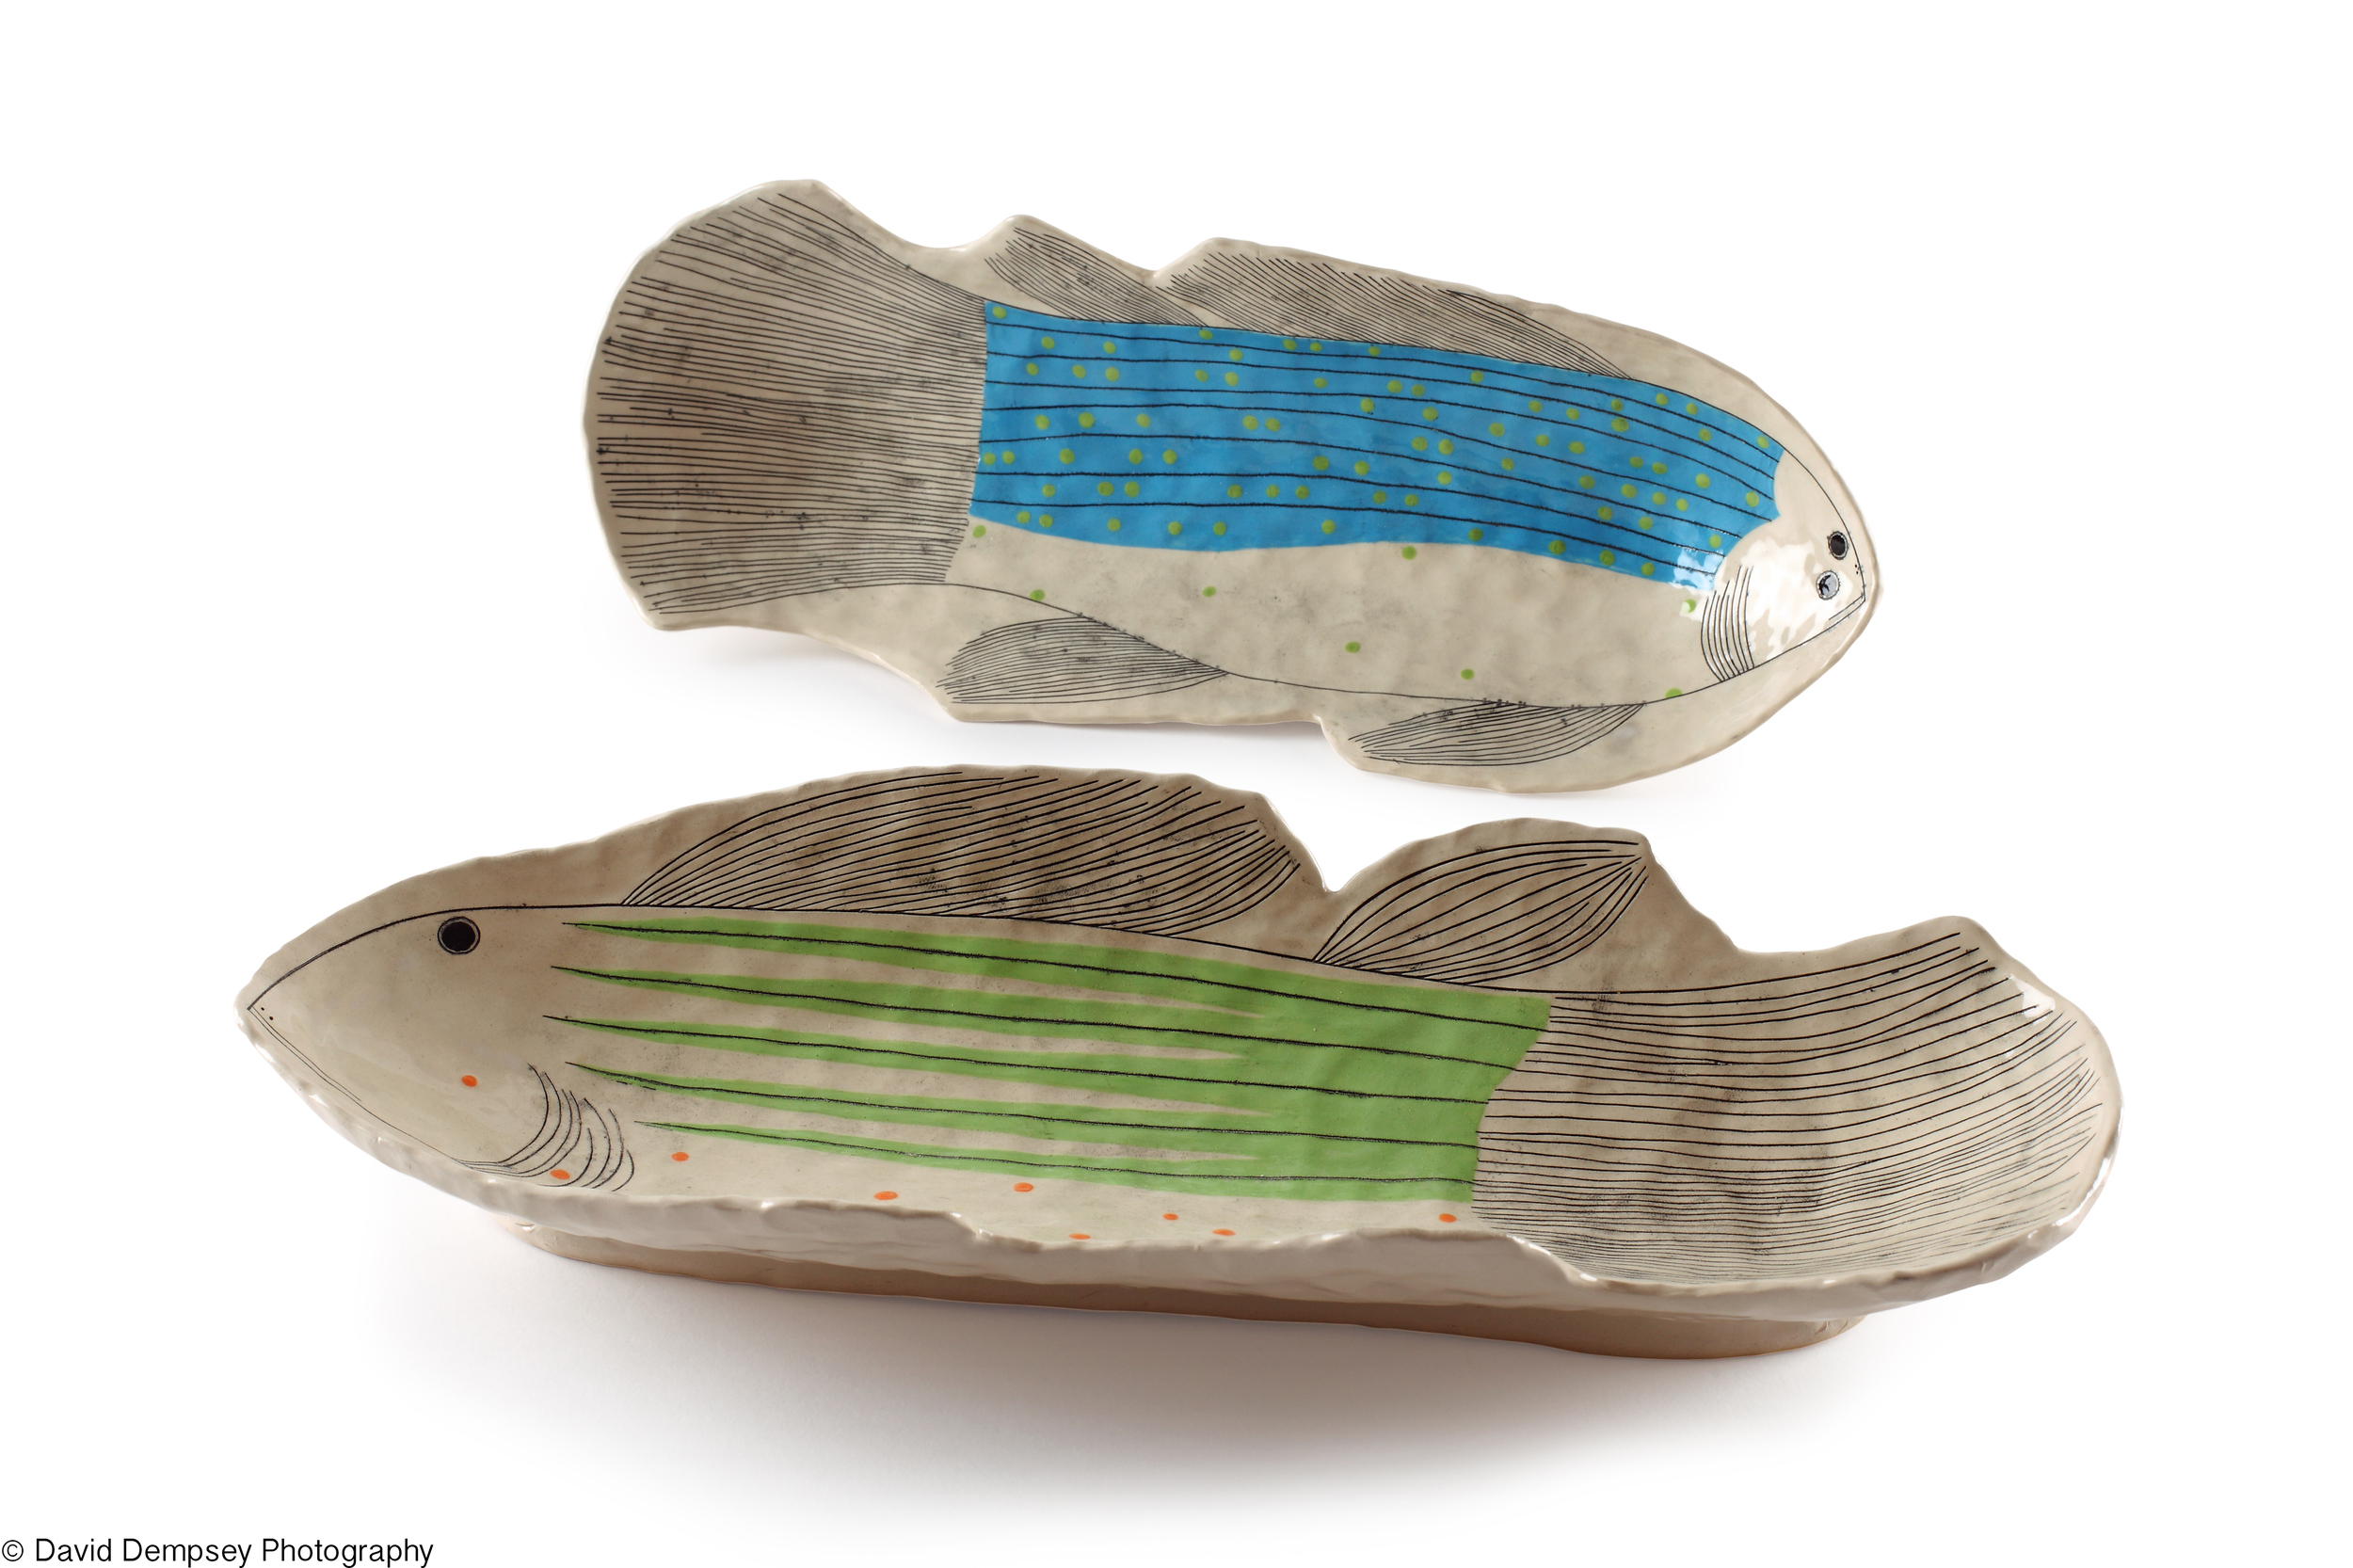 'Ceramic fish' by Andrew Ludick